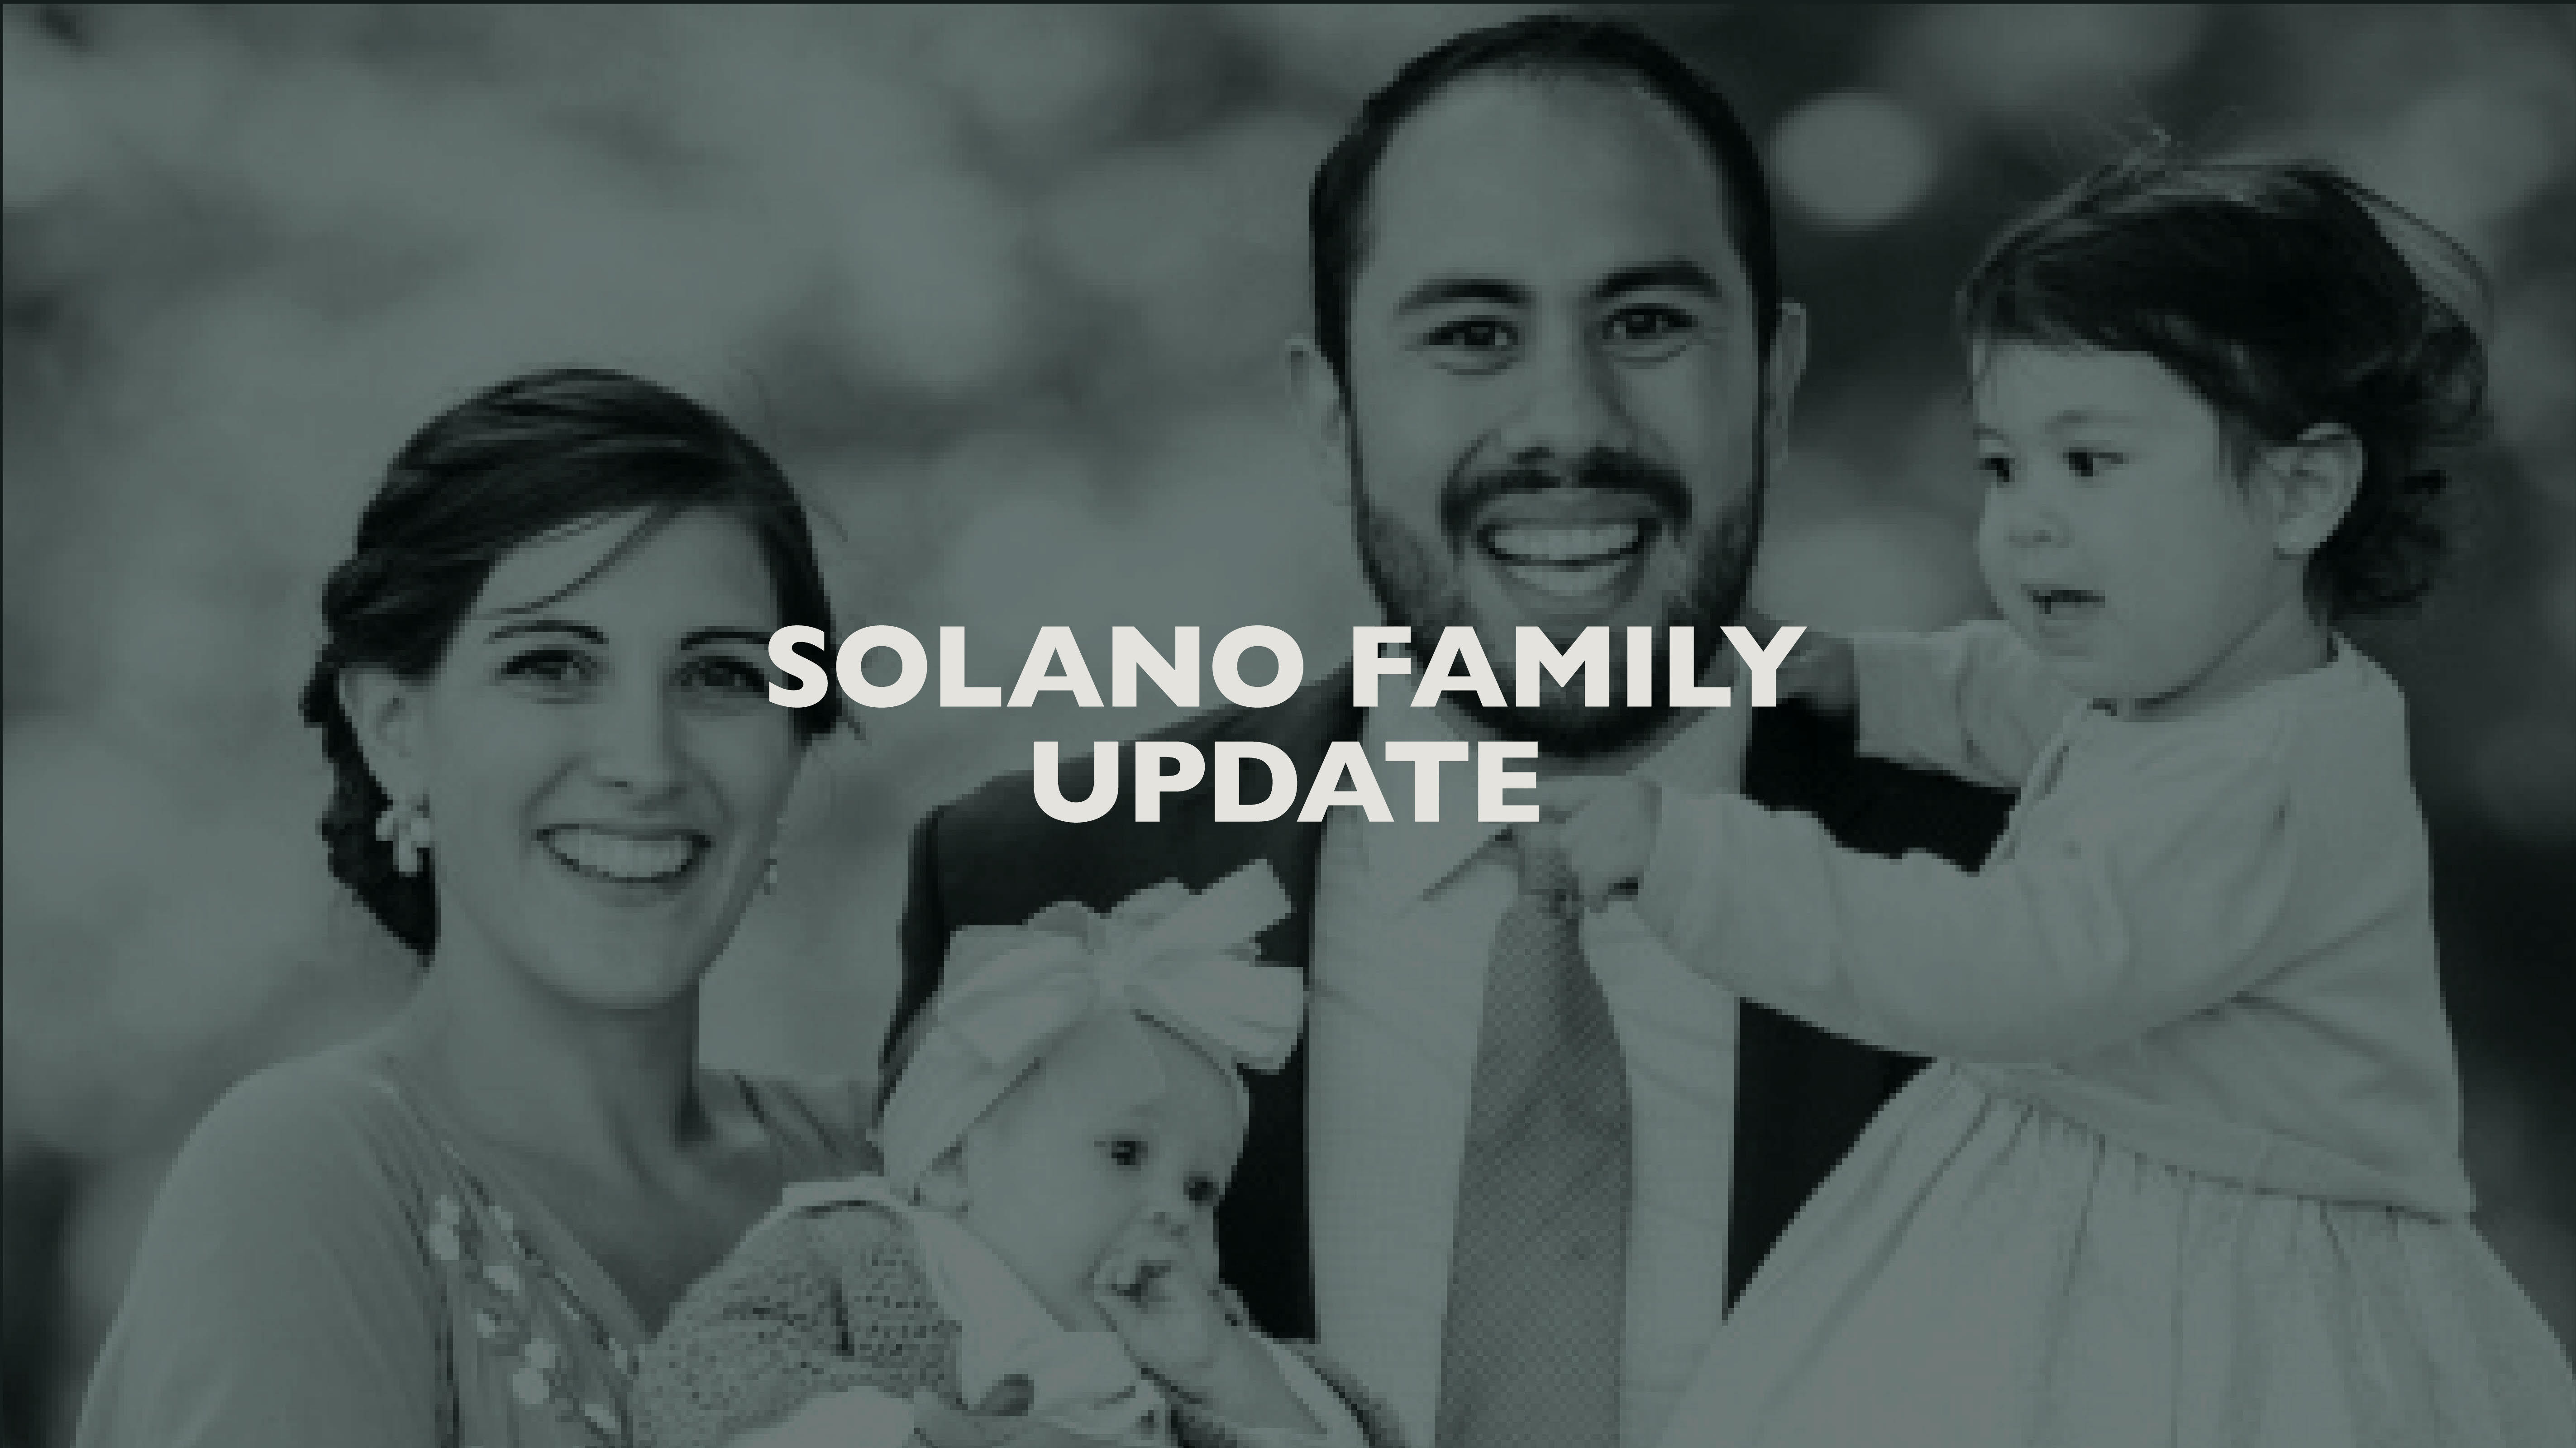 Solano's Update image